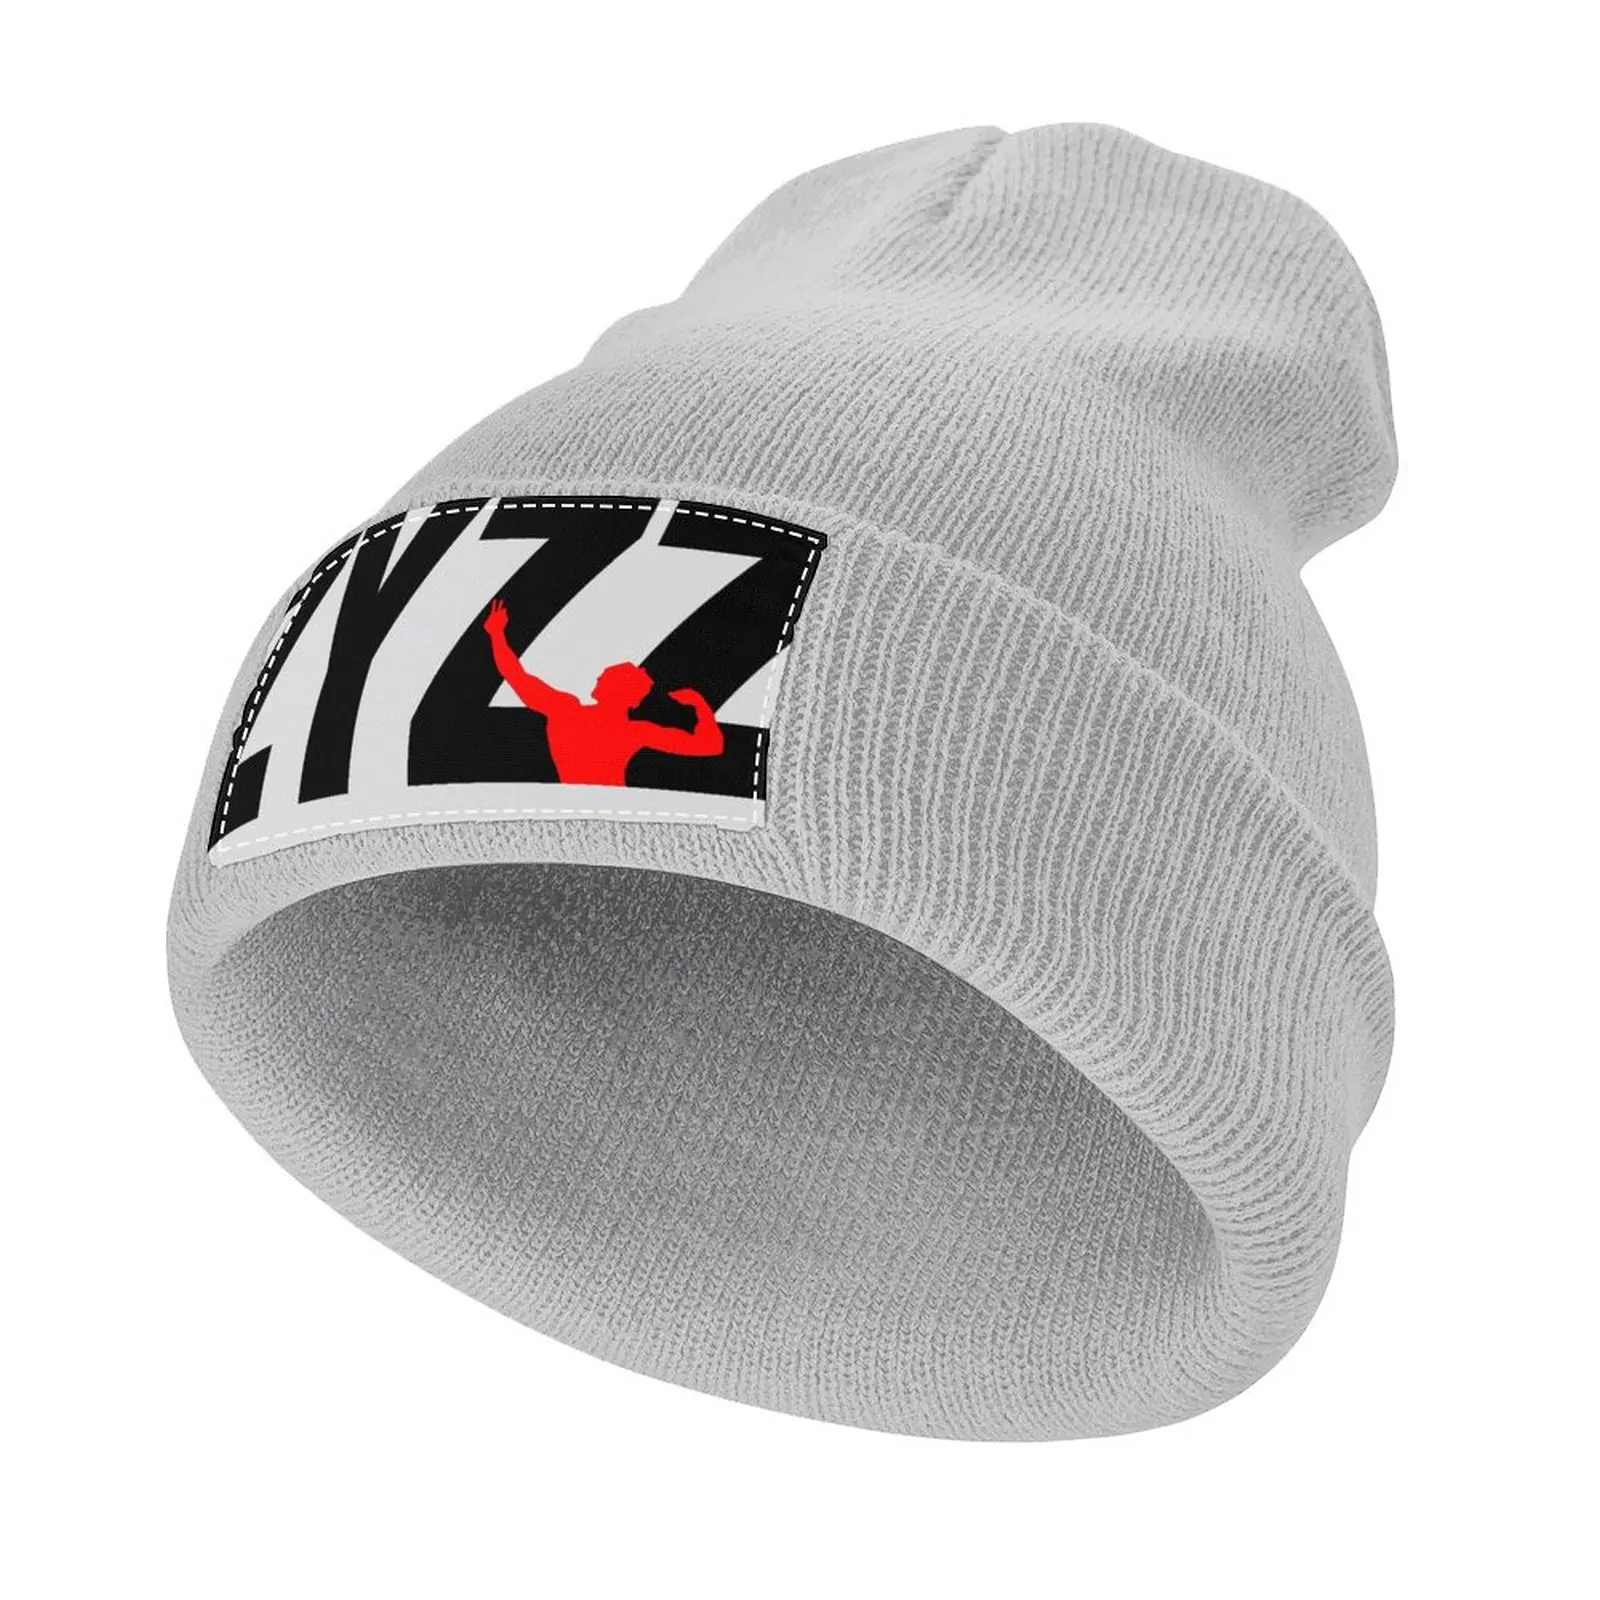 

Zyzz Text Sickkunt Gym Bodybuilding Motivational Aesthetic Veni Vidi Vici Design Knitted Hat Golf Wear Hat For Men Women's